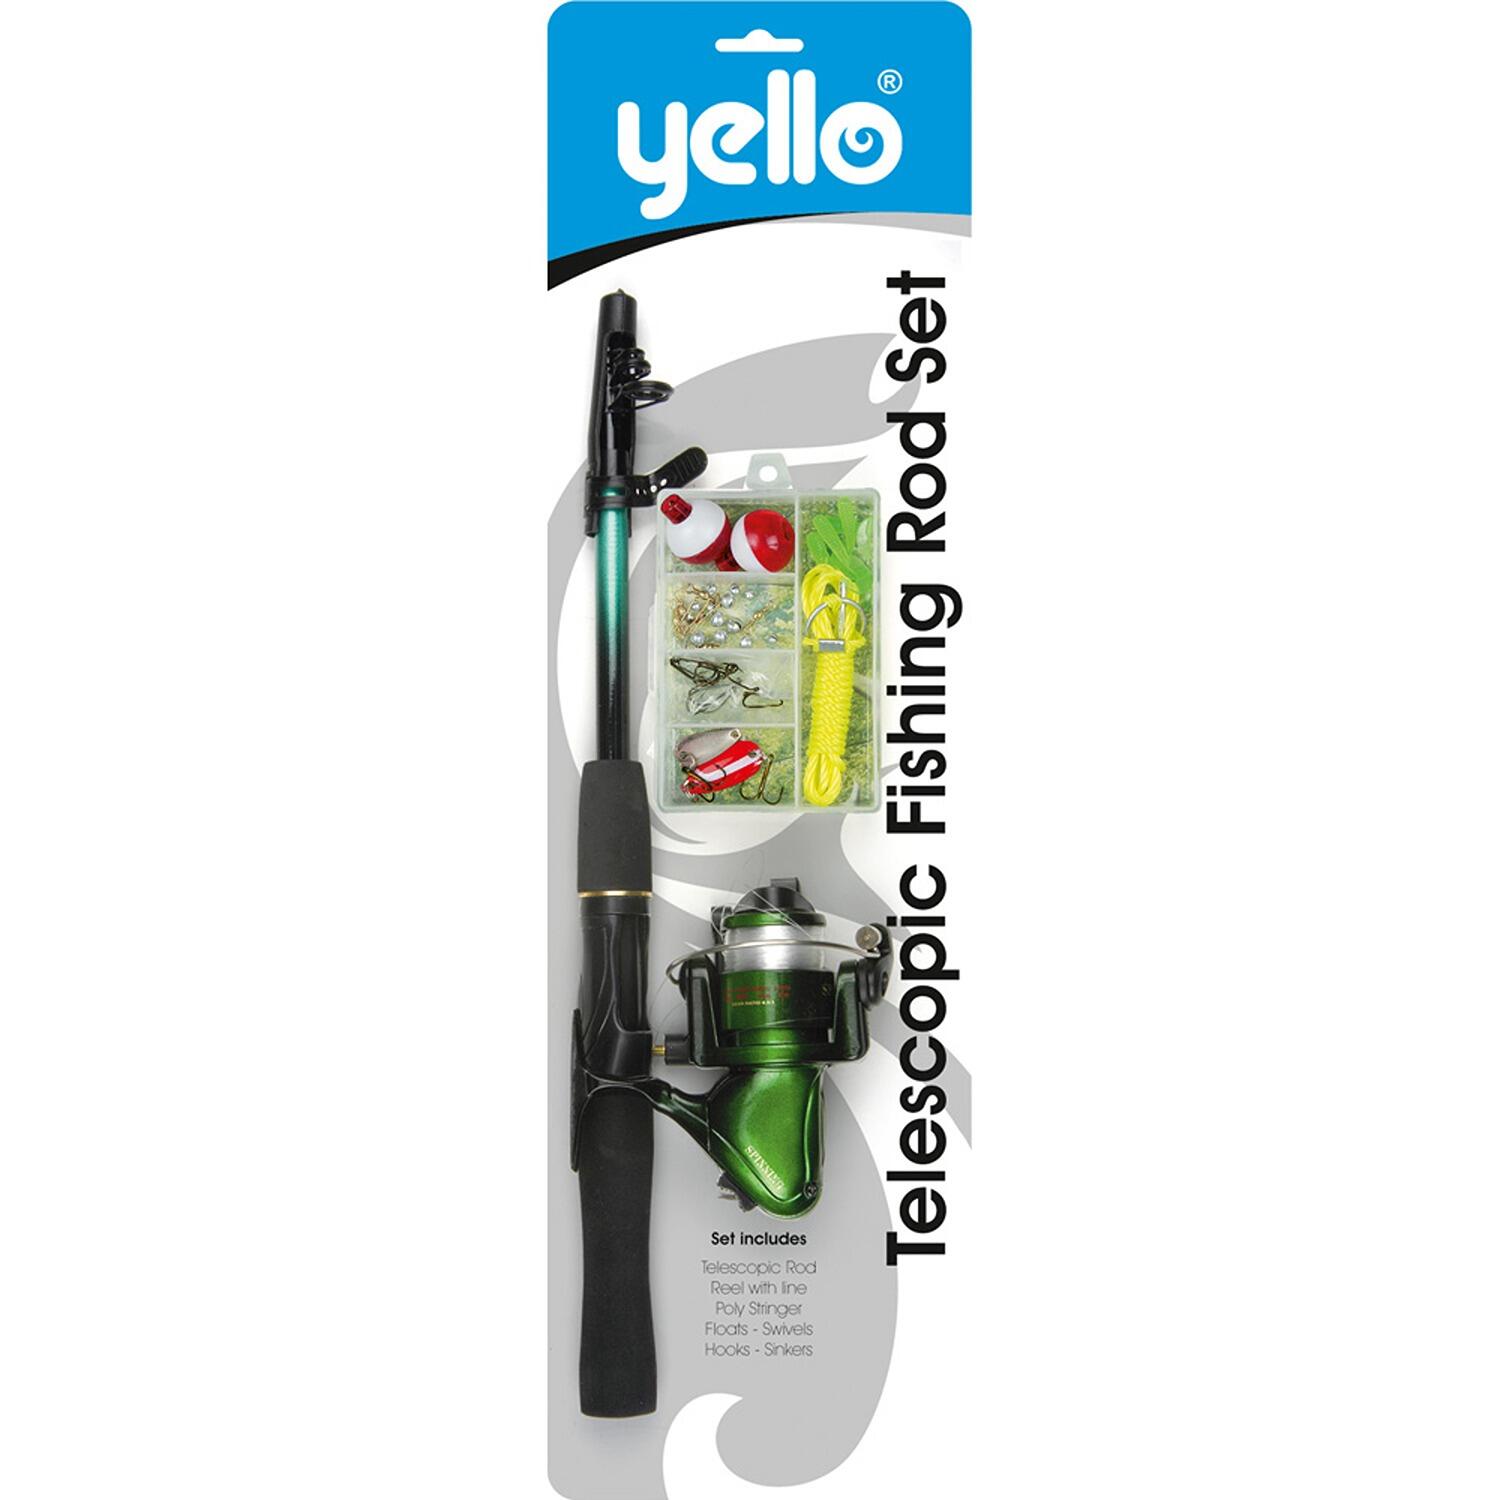 YELLO Yello Telescopic Junior Fishing Rod Set